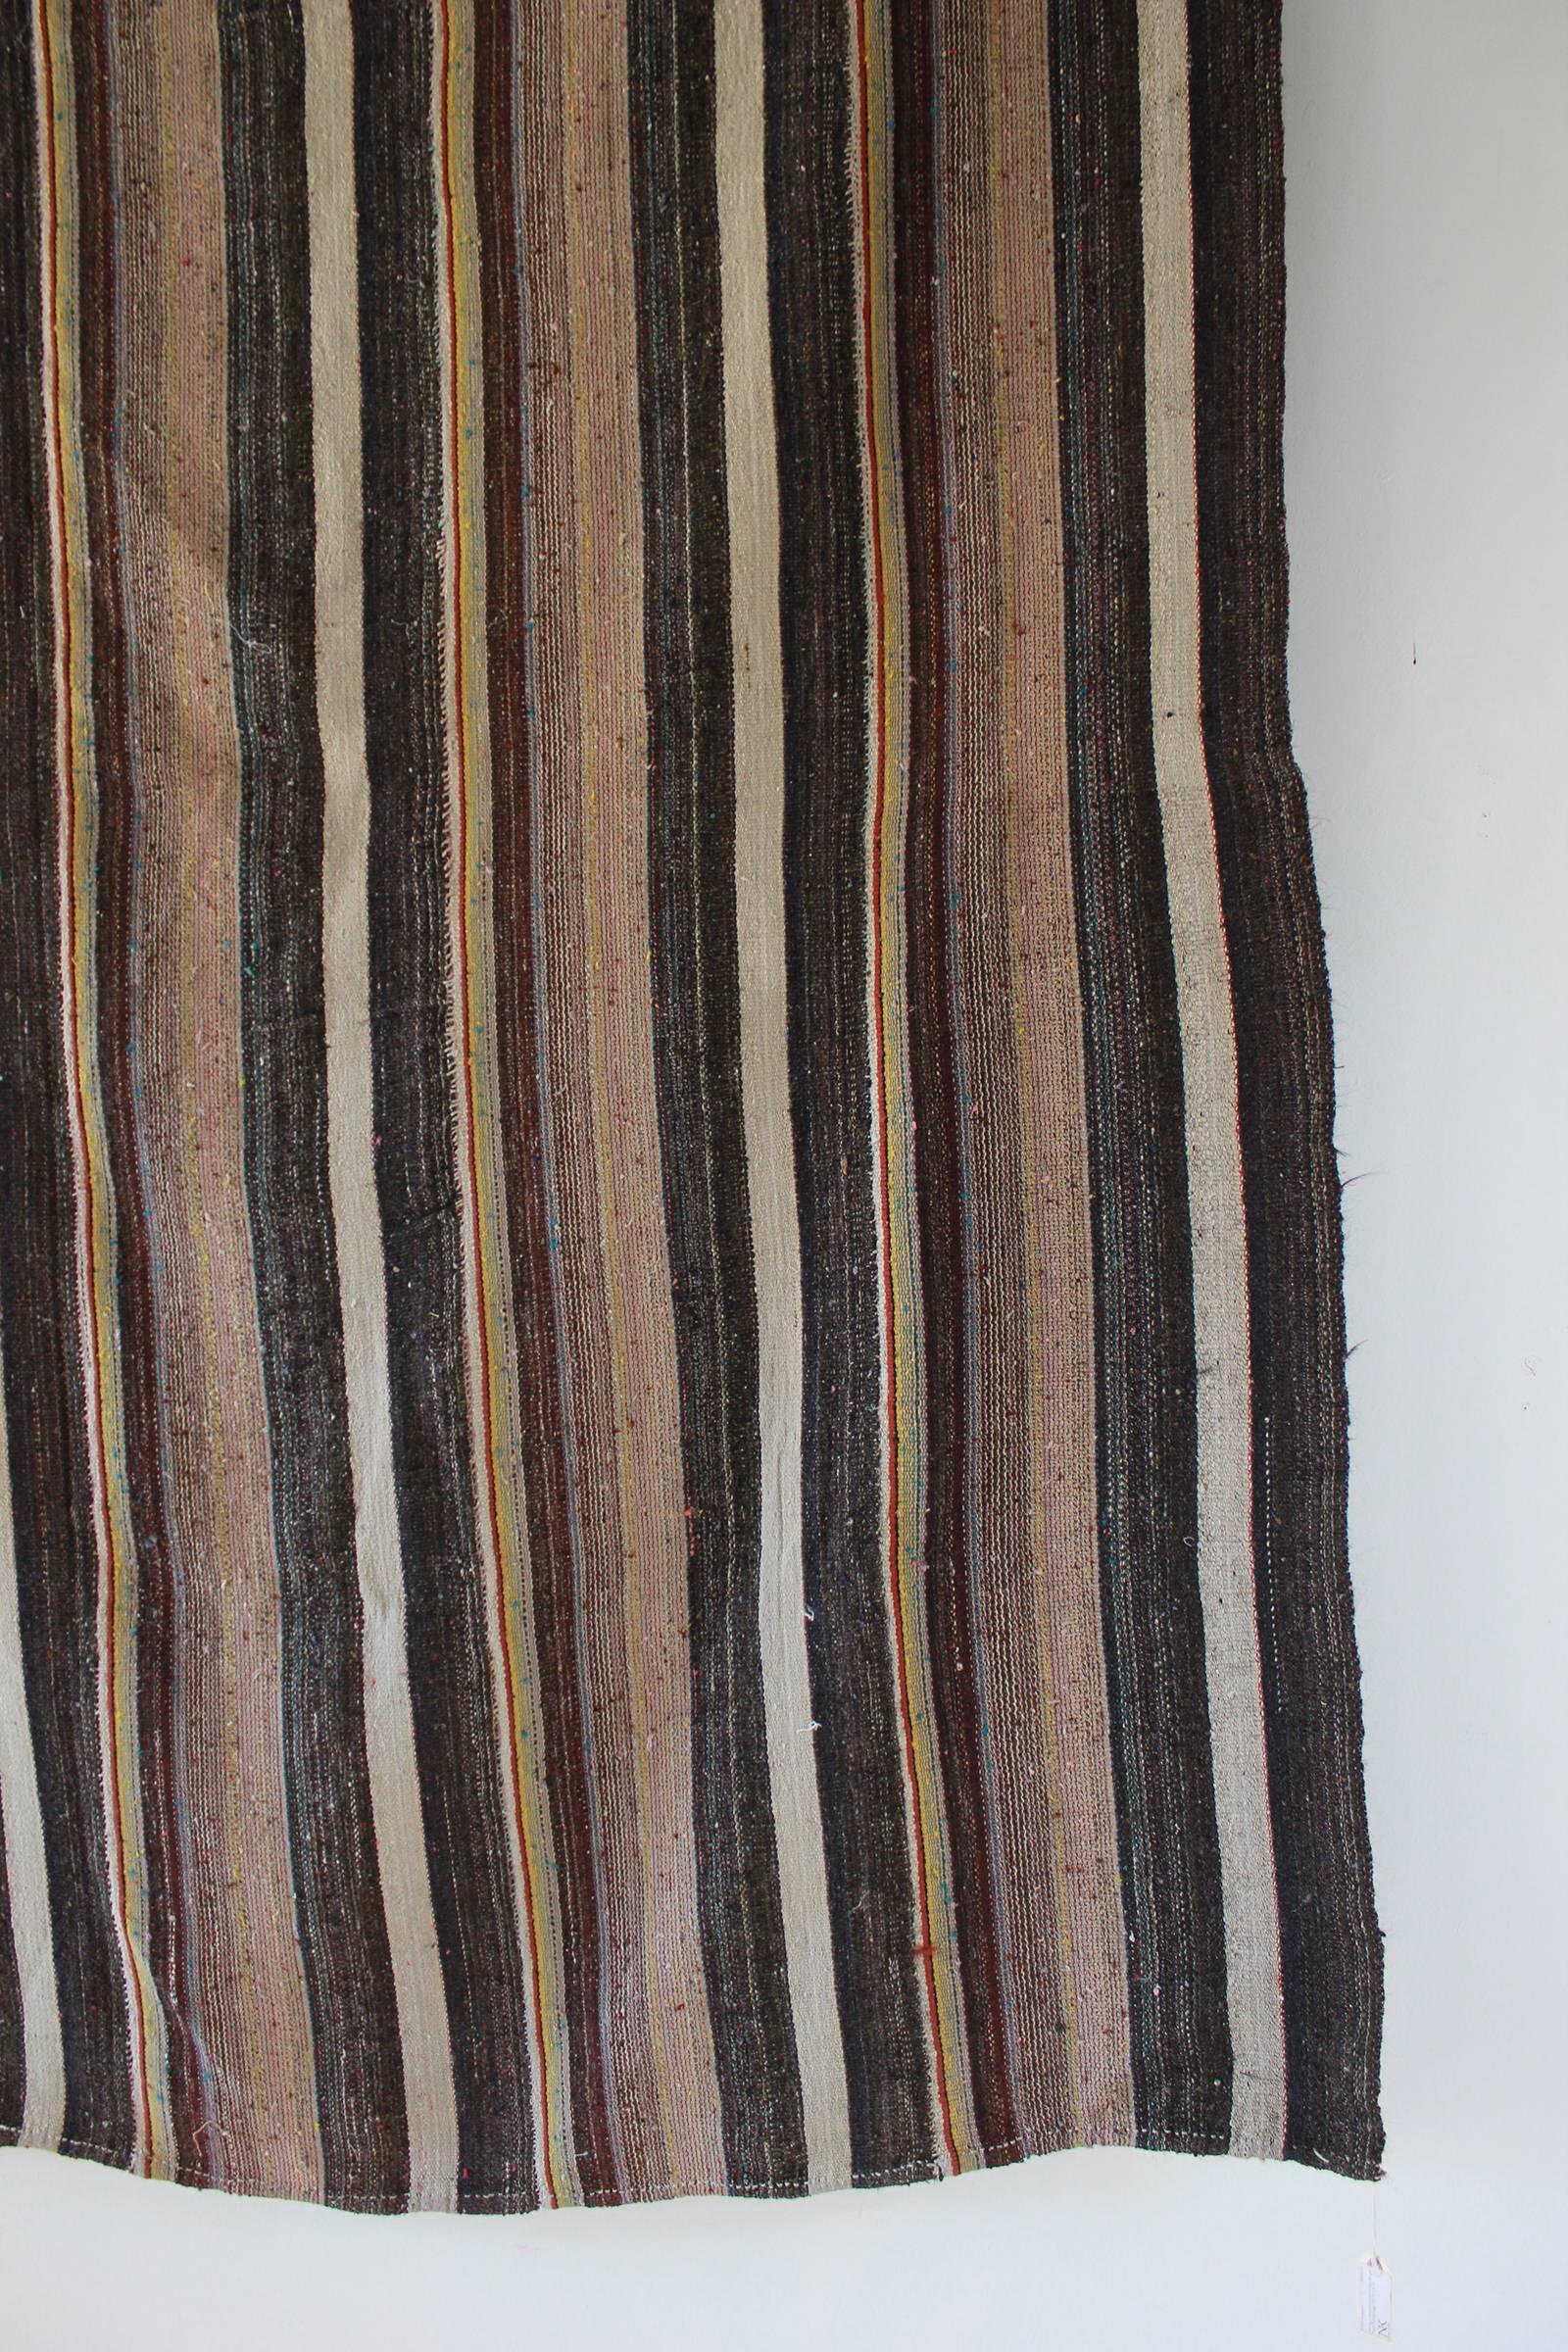 Rustic Flat-Woven Wool Striped Rug 2